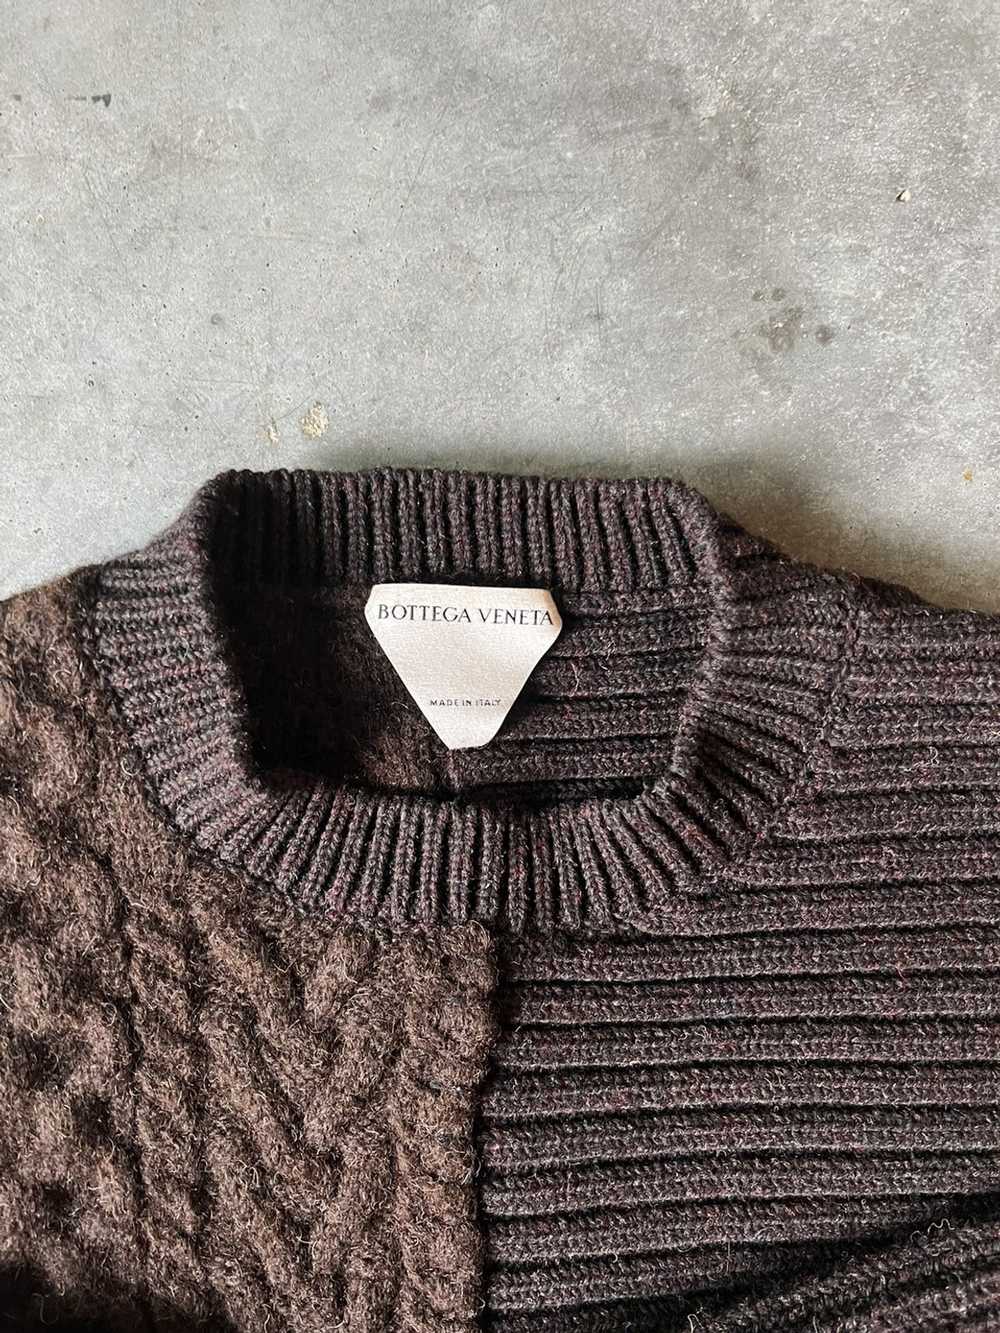 Bottega Veneta Bottega Veneta Wool Cut Out Sweater - image 2